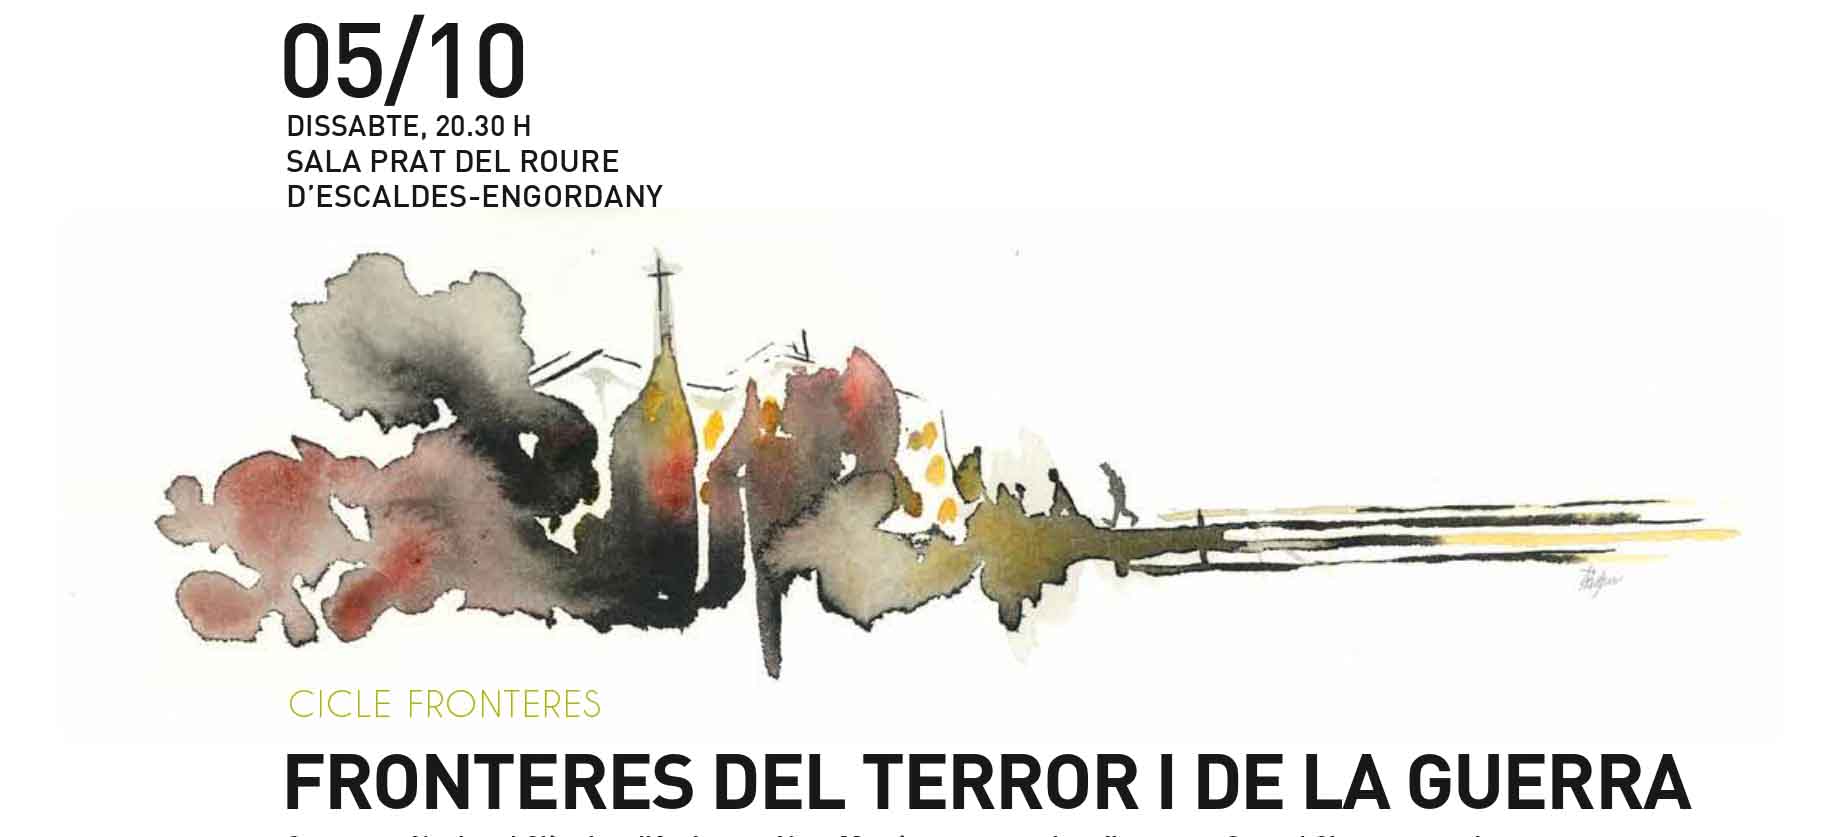 ONCA – Cicle Fronteres: Fronteres del terror i de la guerra